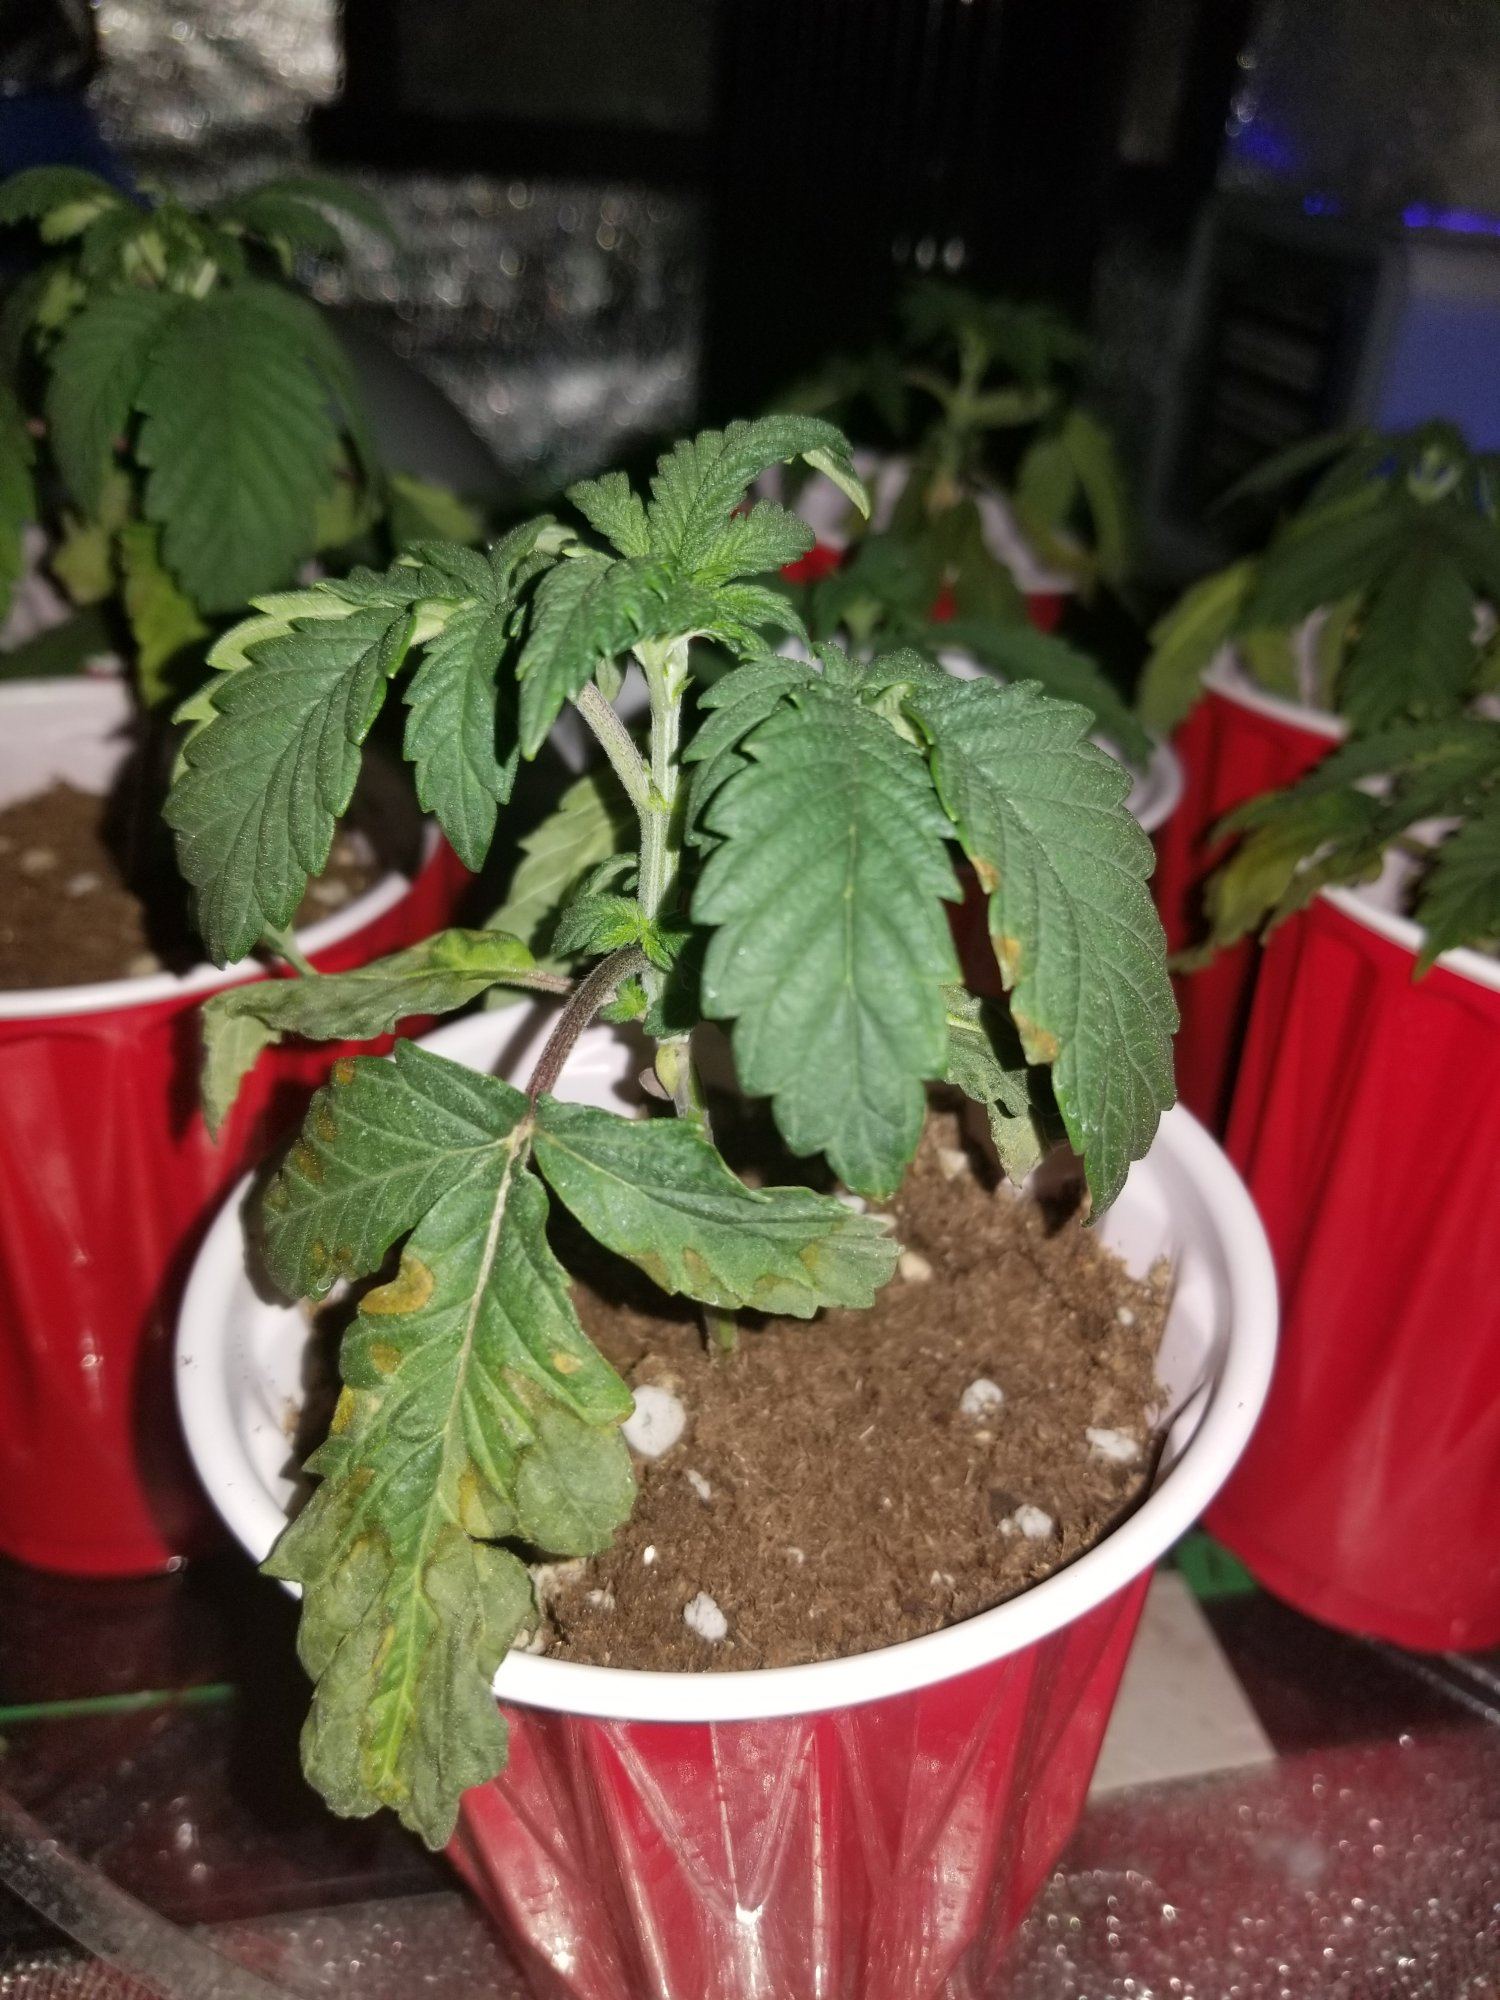 Needing some help with my plants